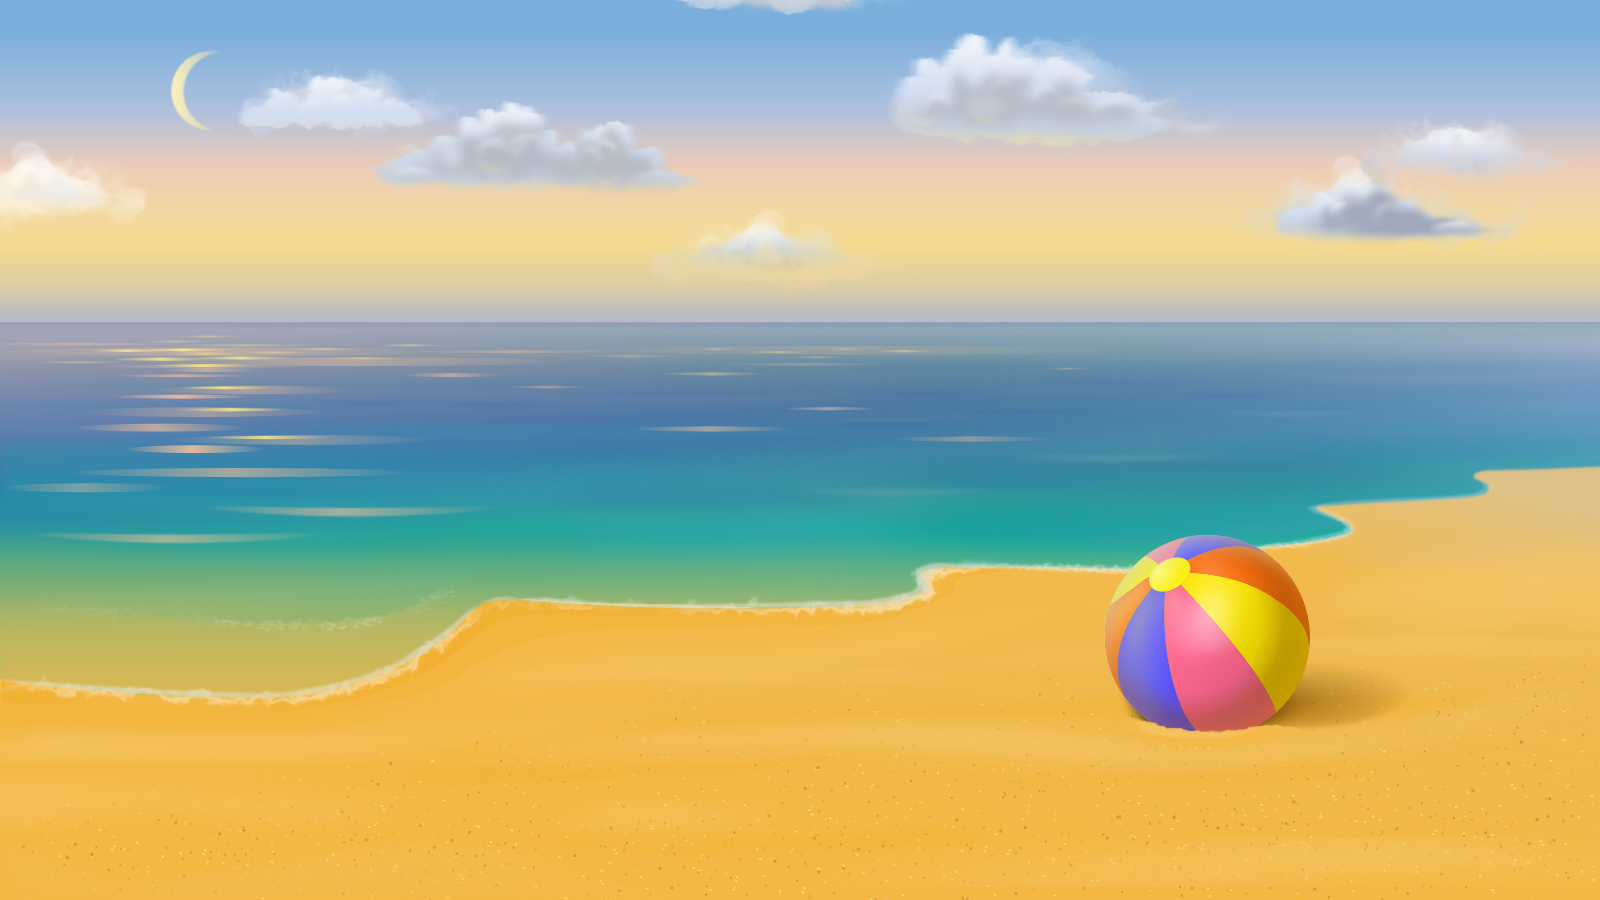 Beach Background With Beach Ball